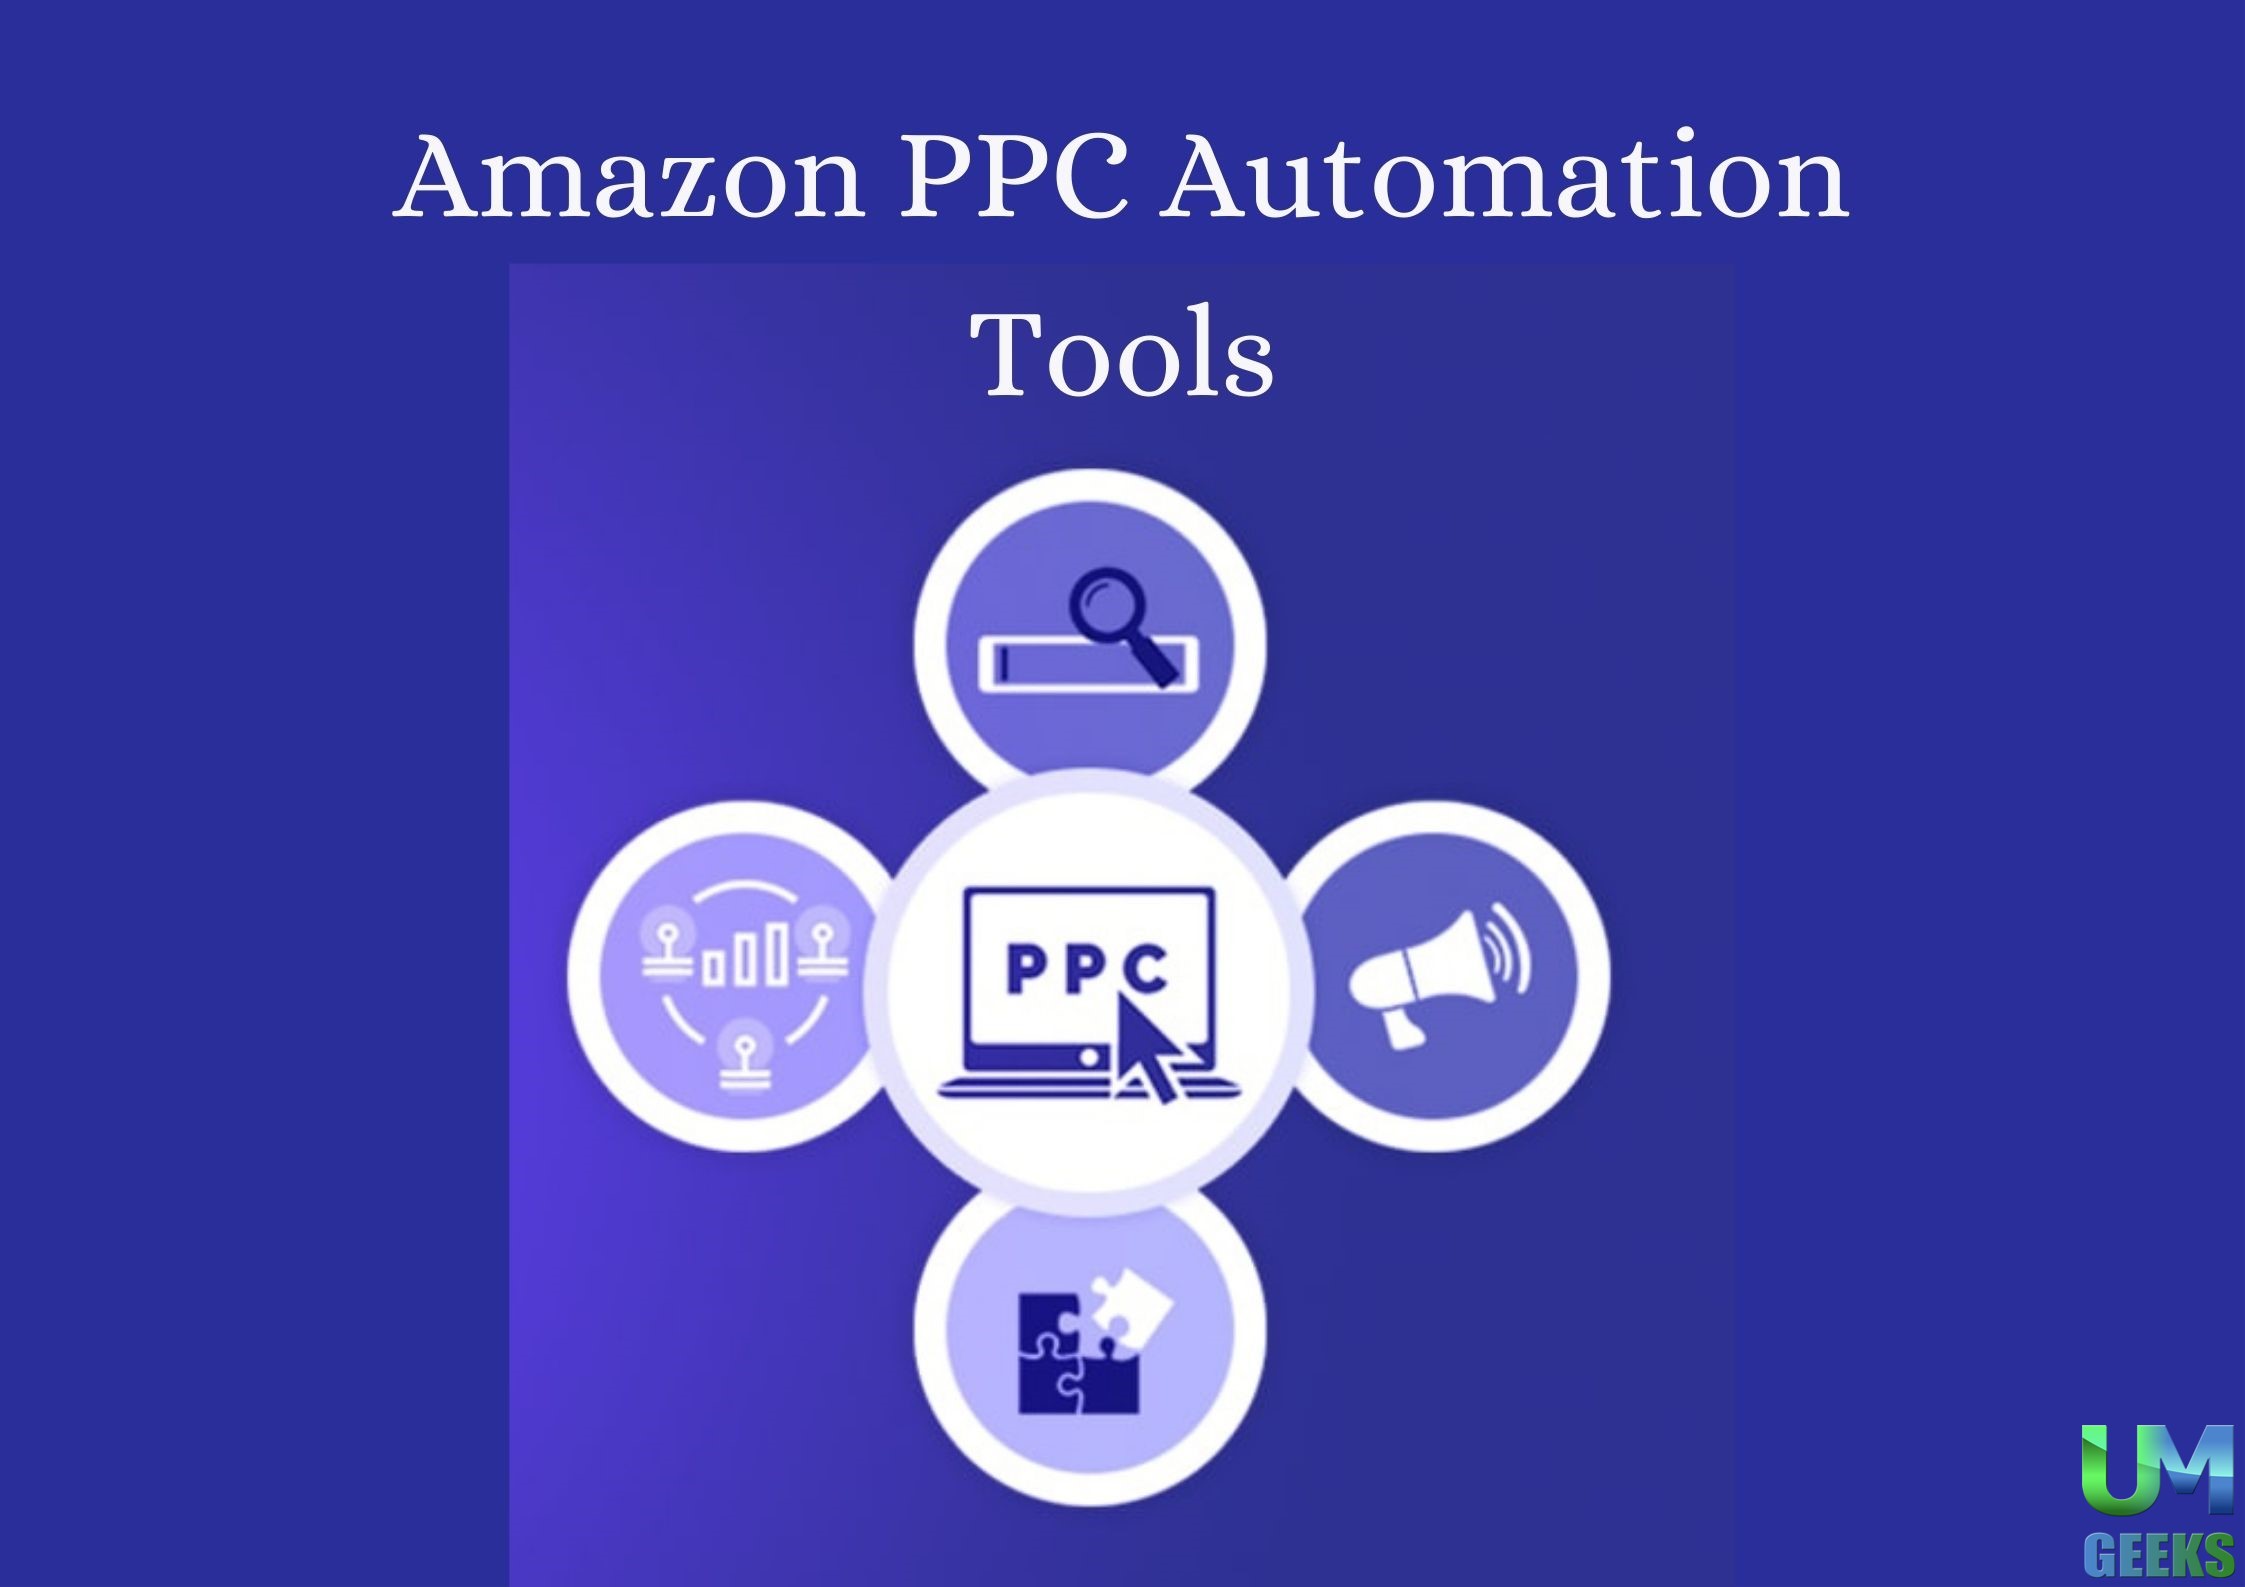 Amazon PPC Automation Tools